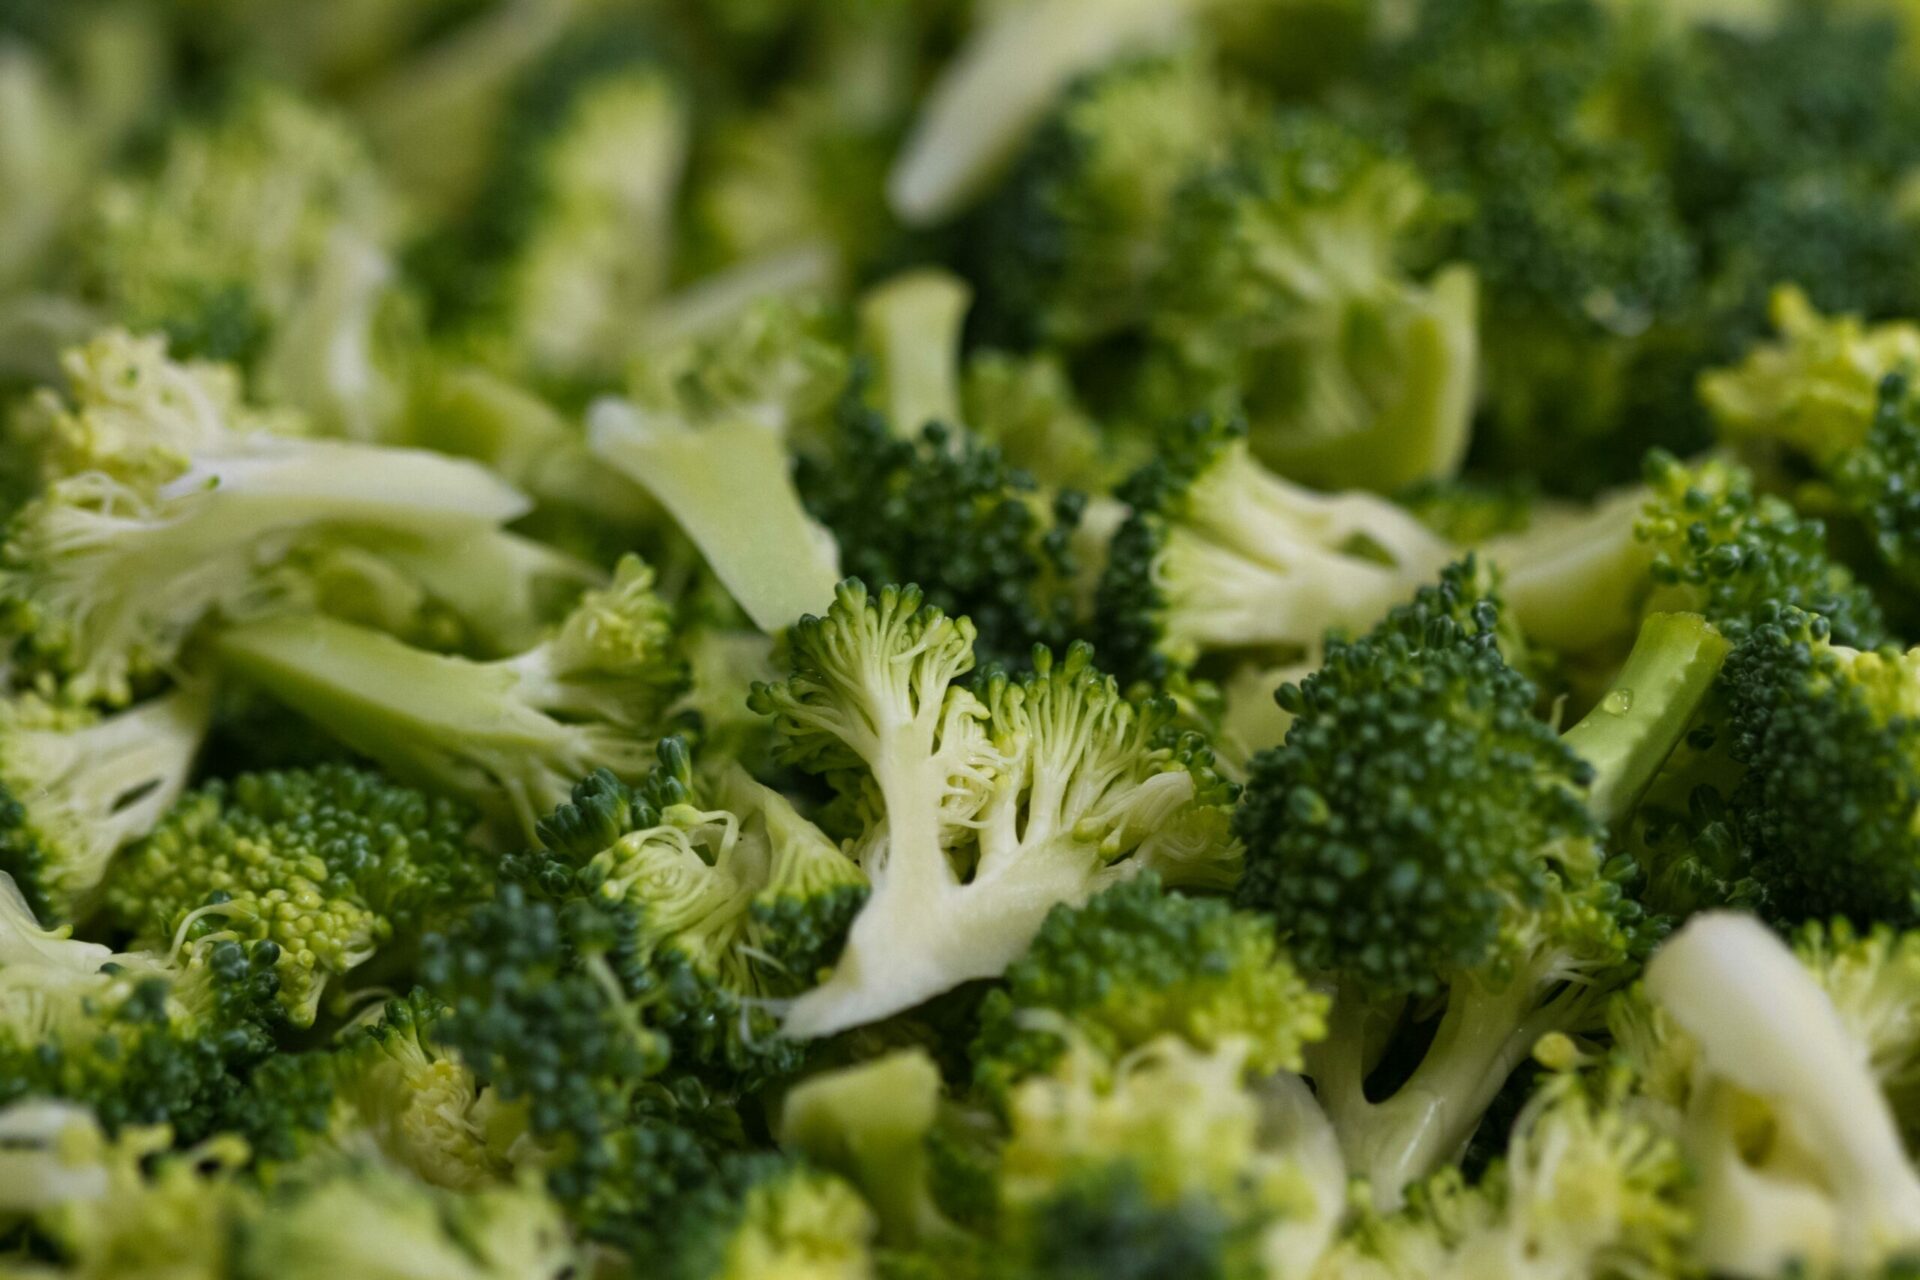 How To Make Broccoli Baby Food